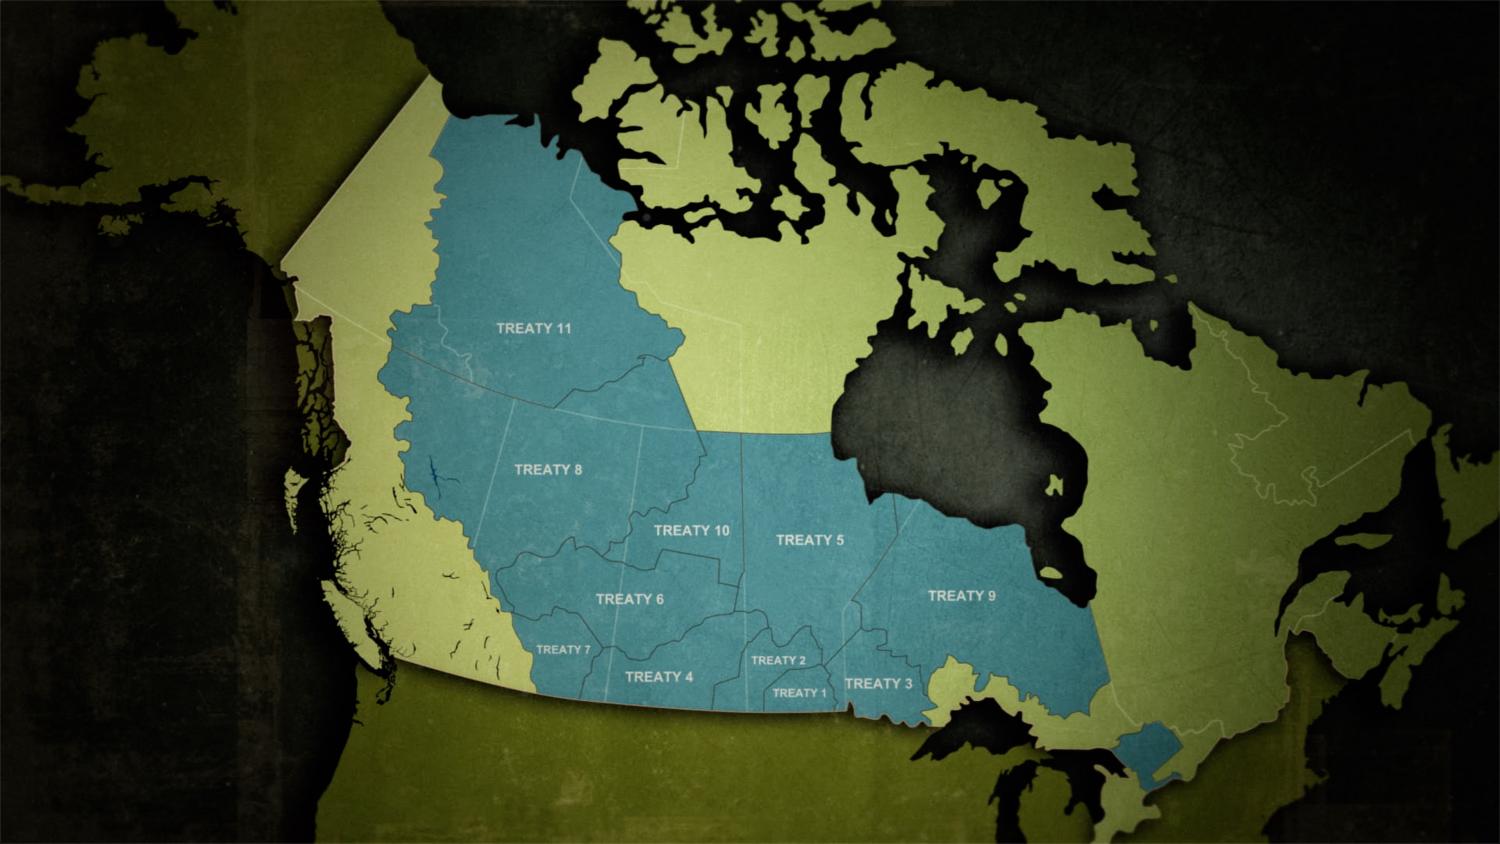 Historical treaties of Canada